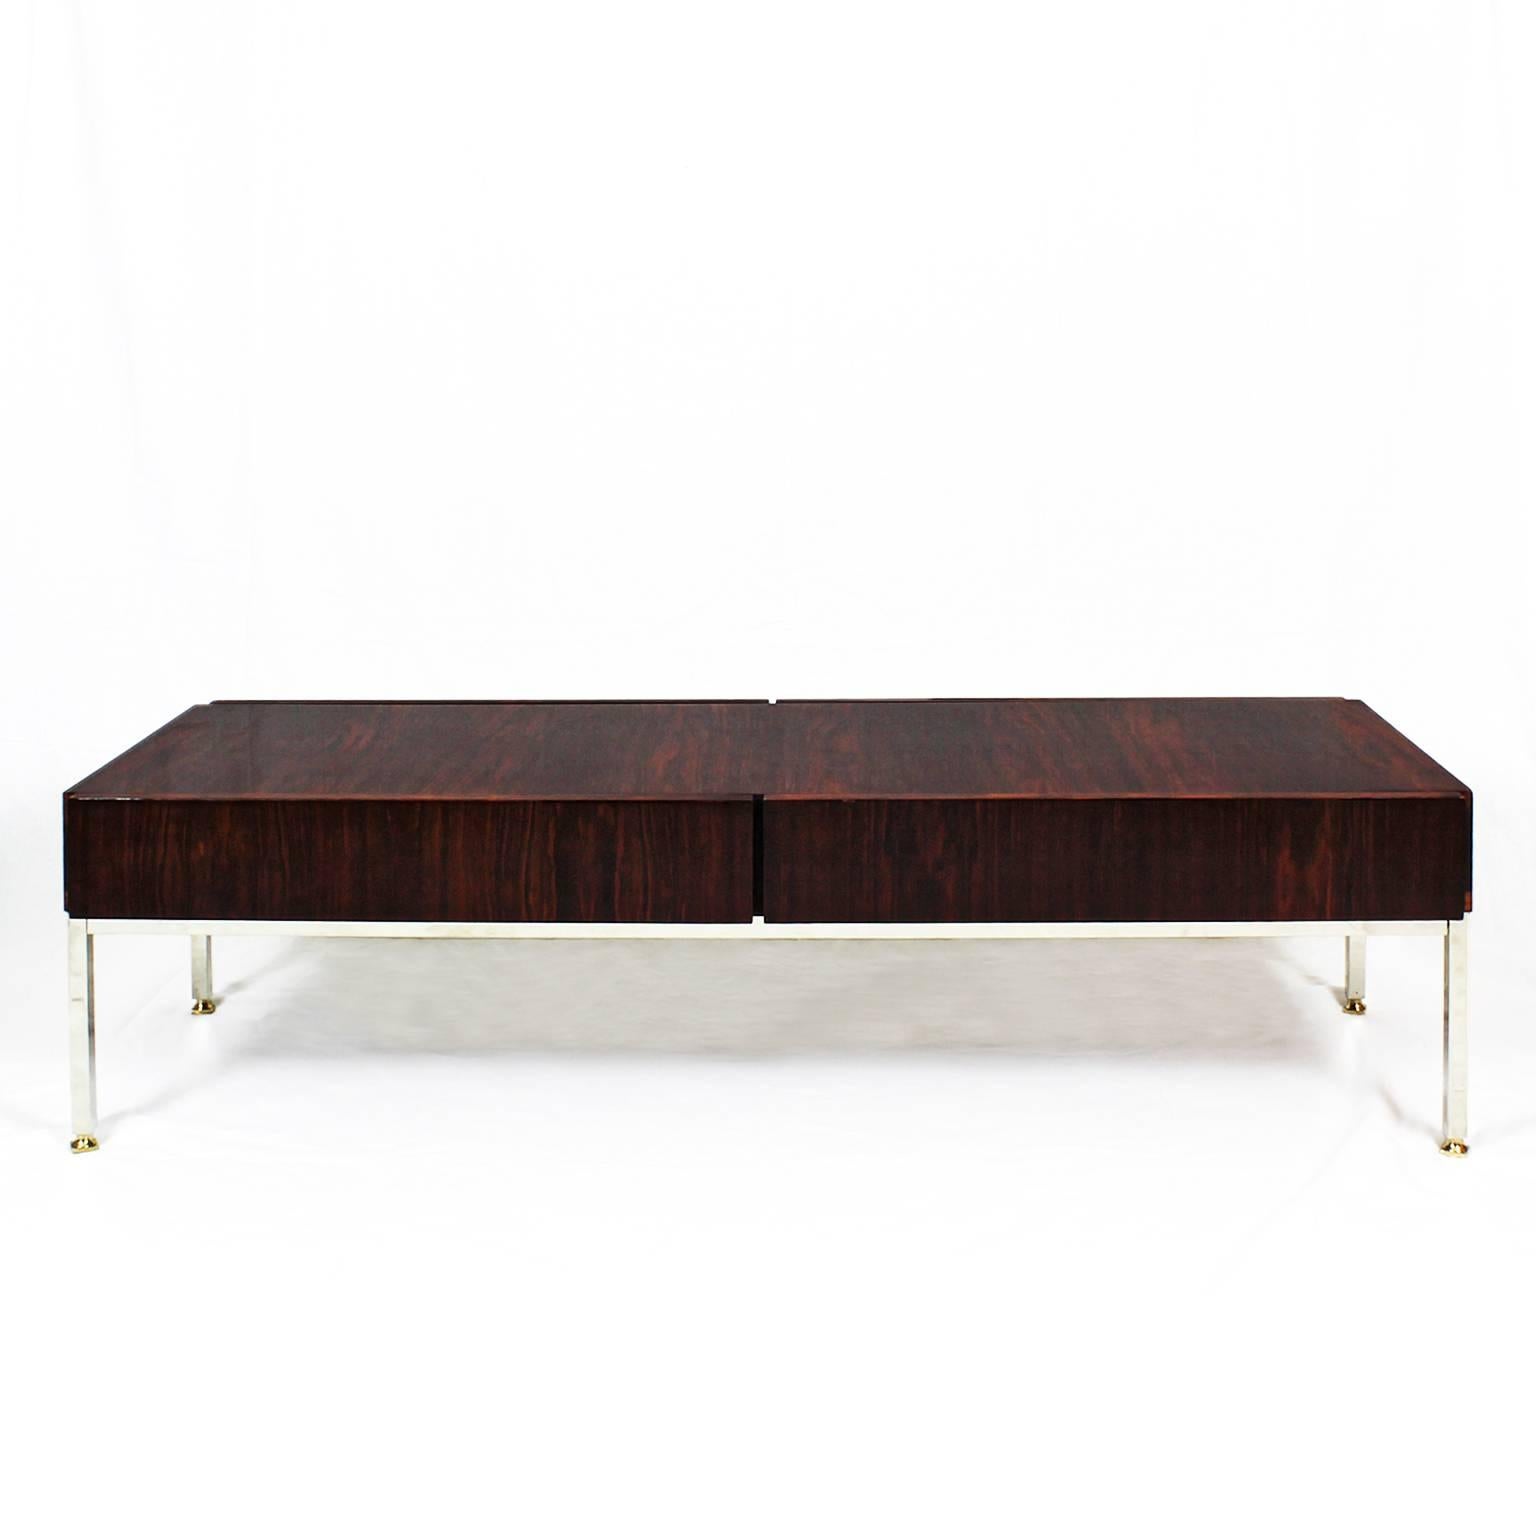 Coffee table with two drawers on one side, mahogany veneer, French polish, nickel-plated metal feet.
Designer: Luigi Bartolini - Paris (label),
France, circa 1960.